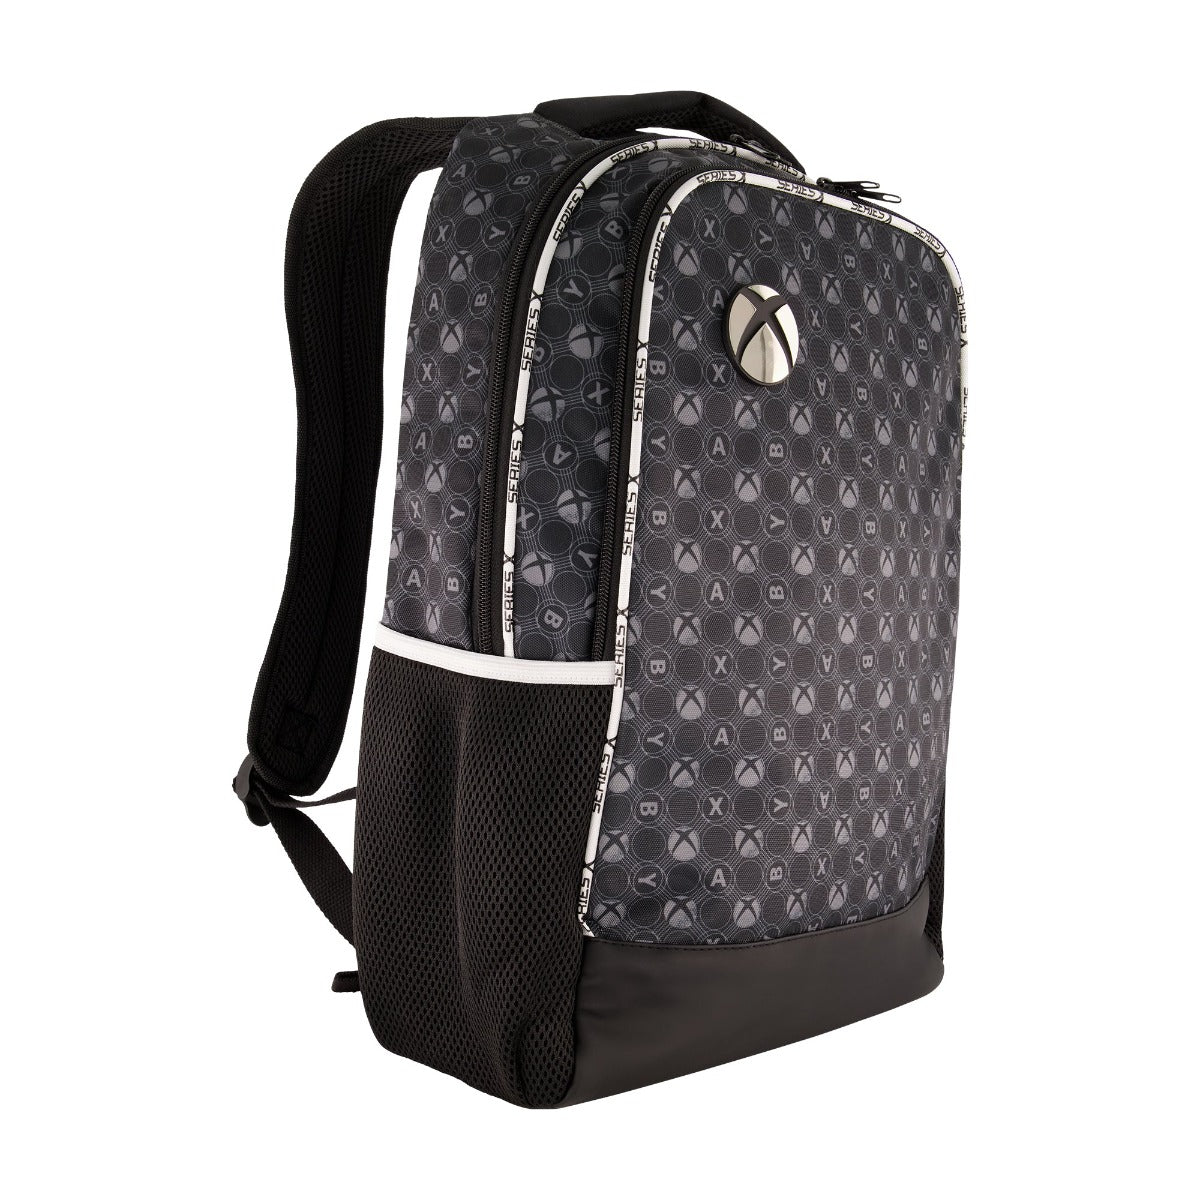 Black Xbox gamer geome backpack - best backpacks for gamers